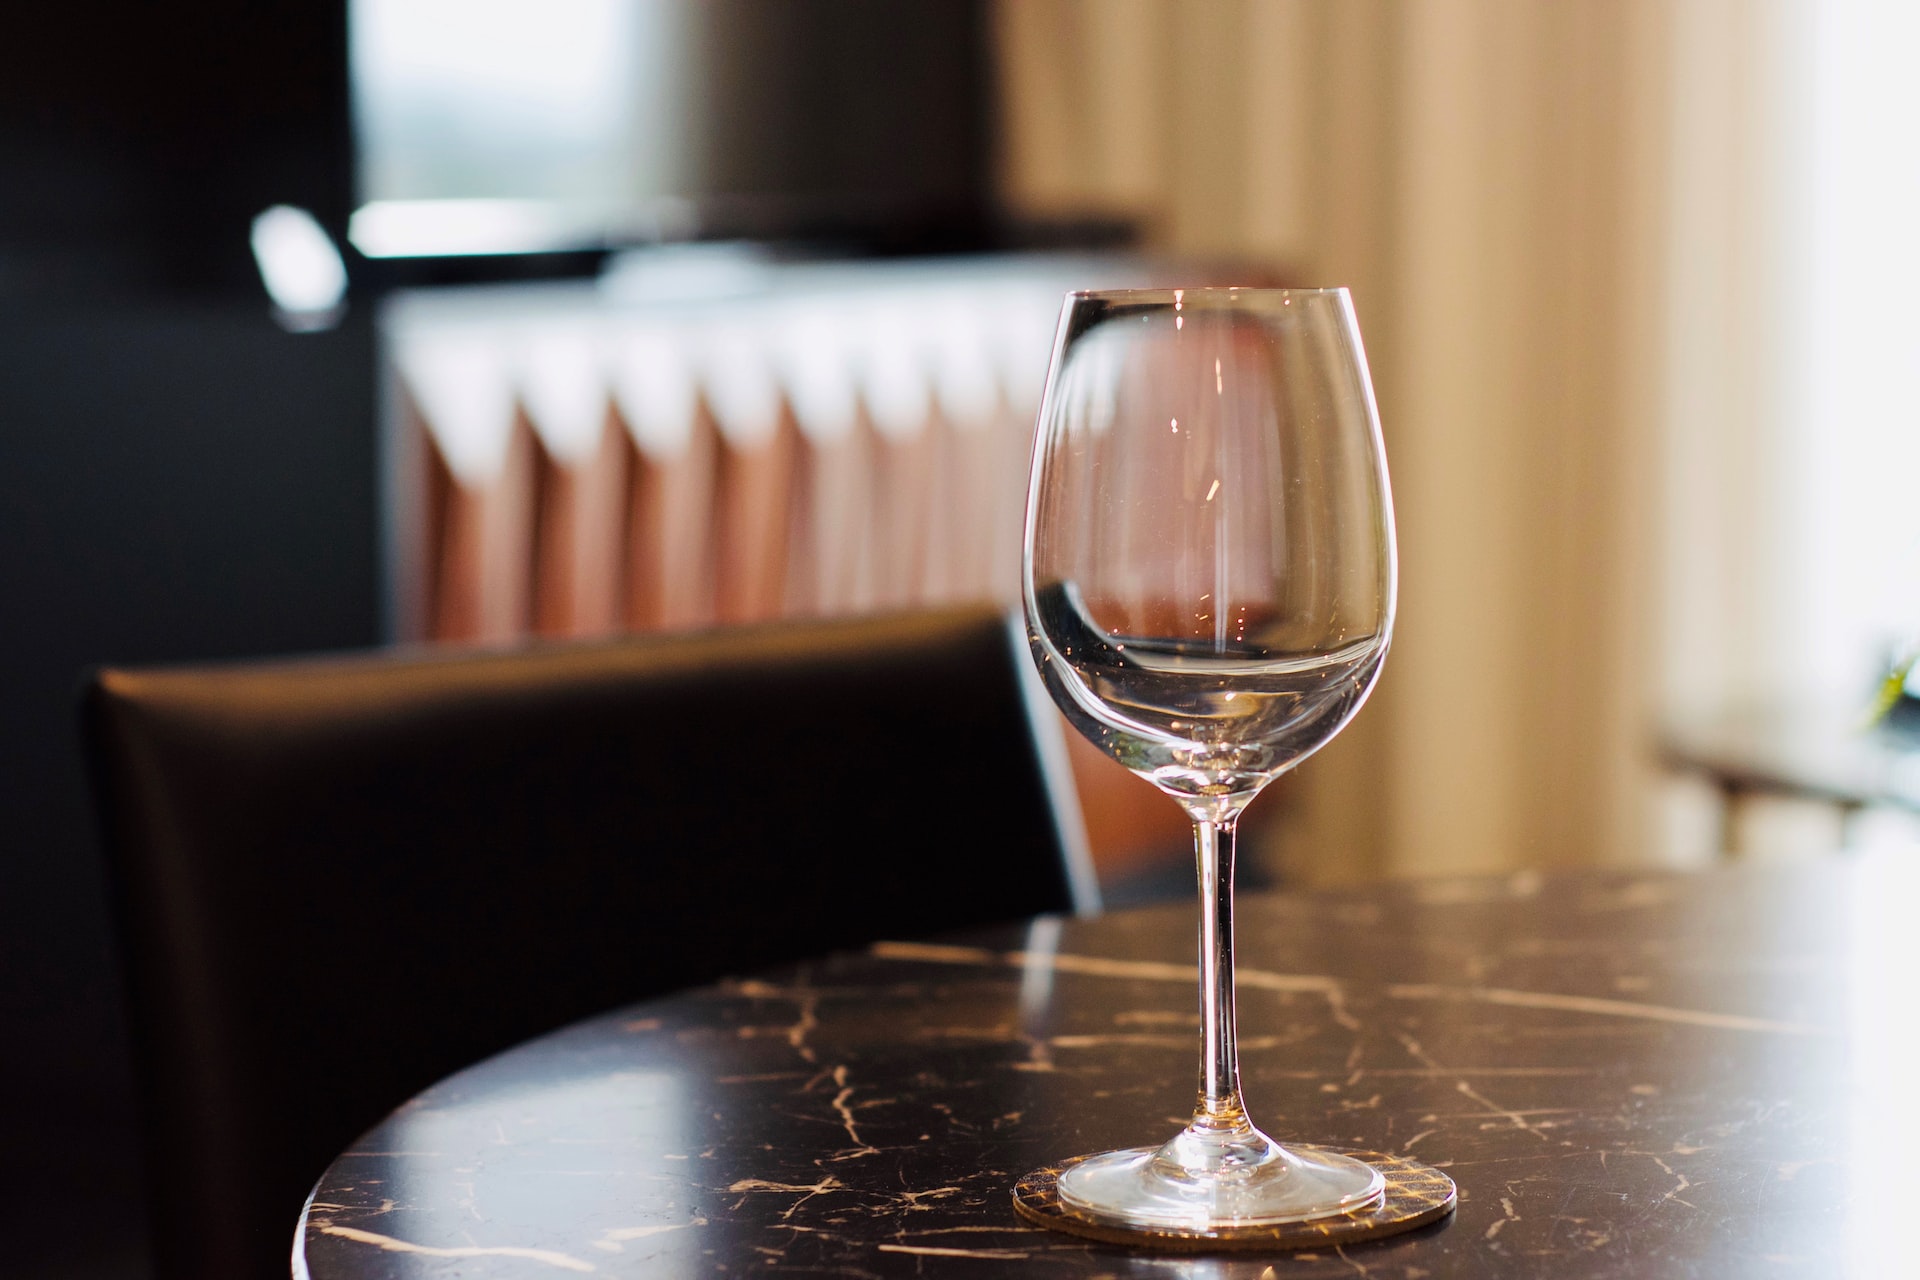 Designer Wine Glasses: The Importance of Aesthetics in Drinking